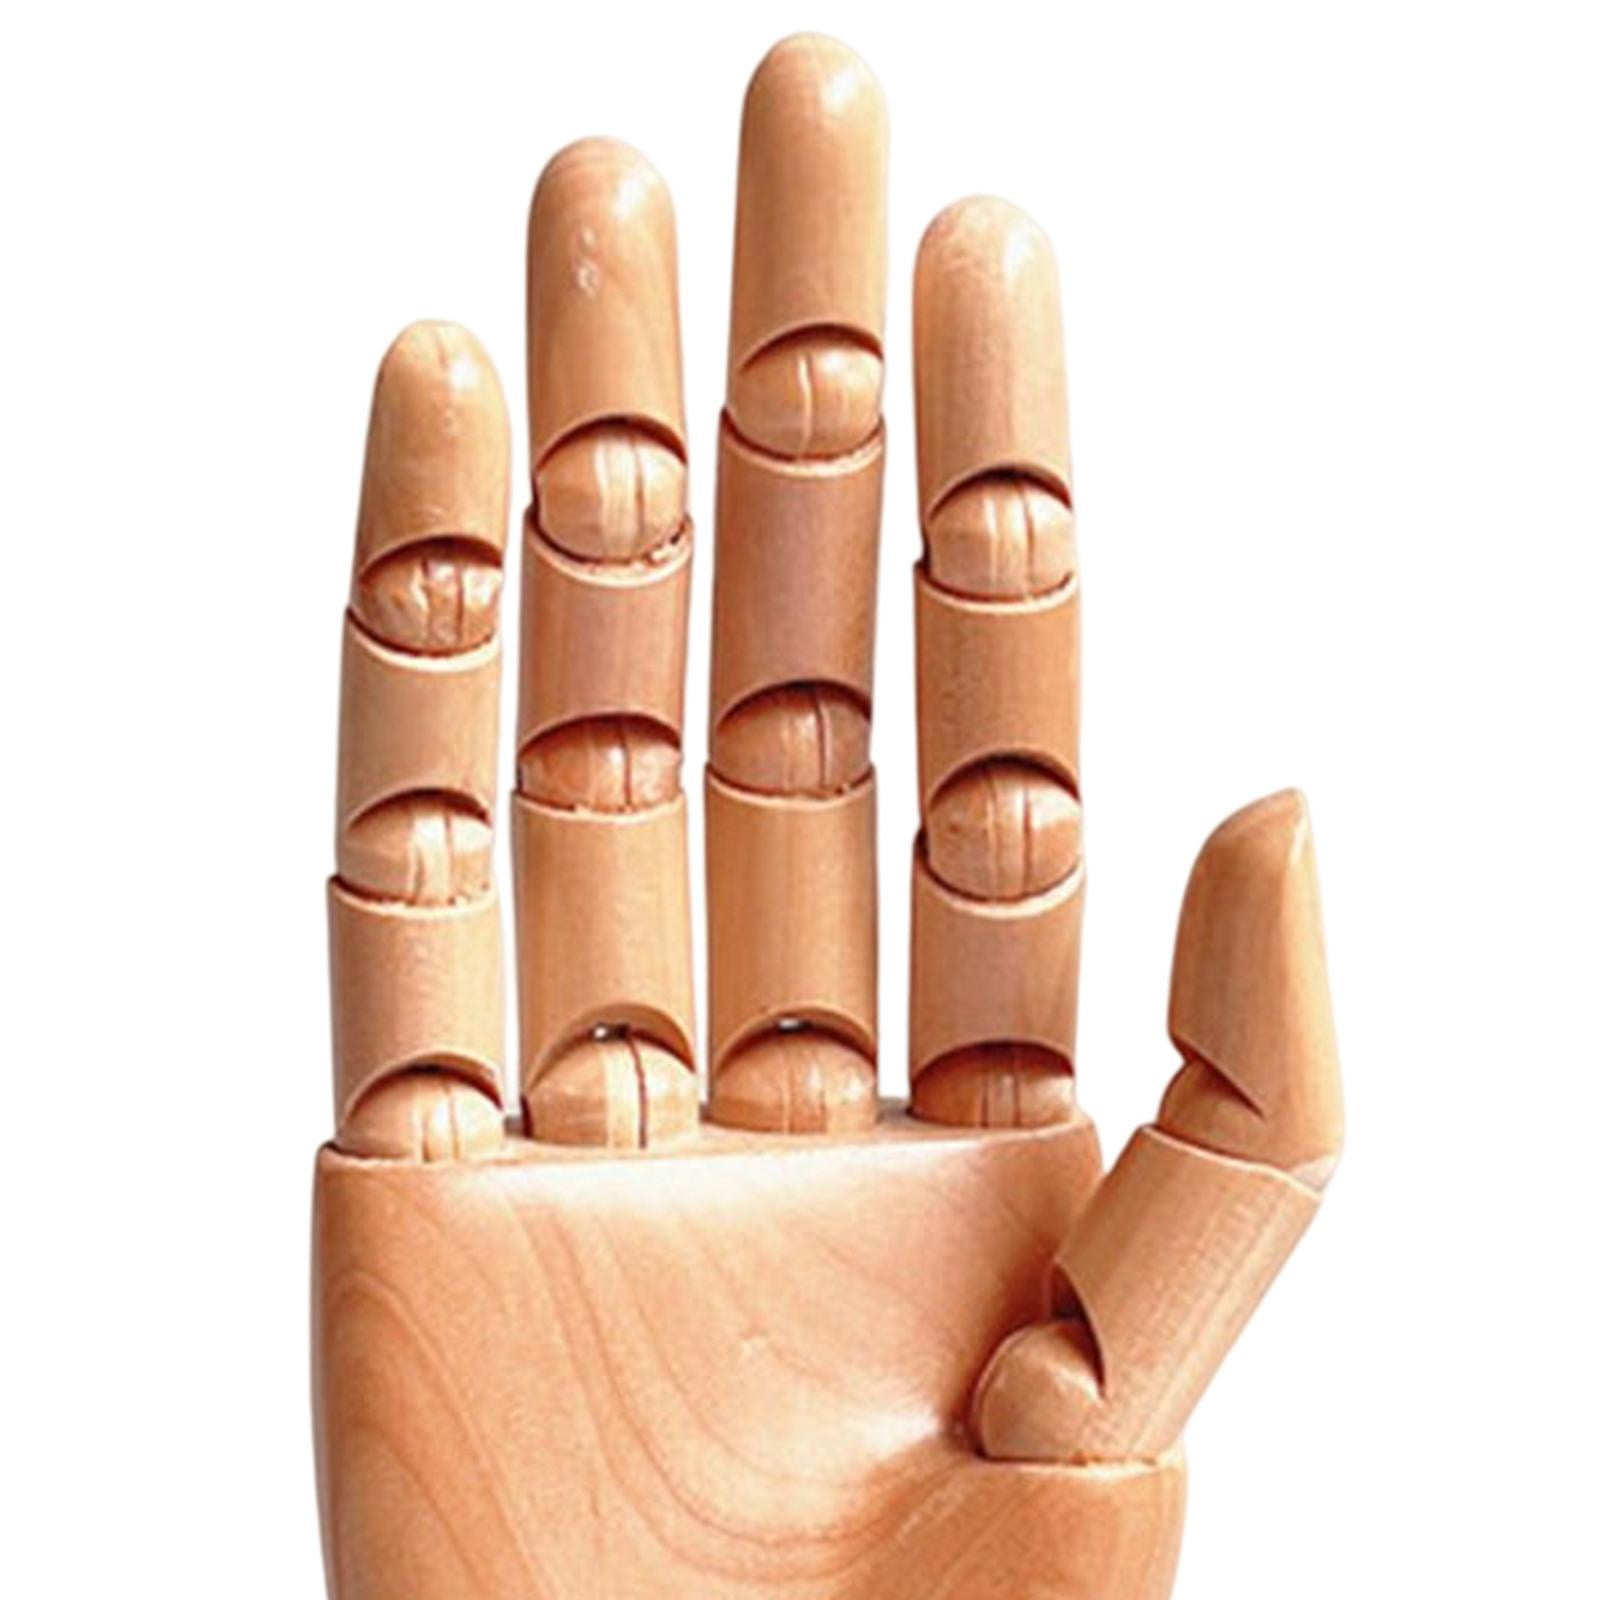 Wood Grain Hand Mannequin, Hand Wood Jewelry Display